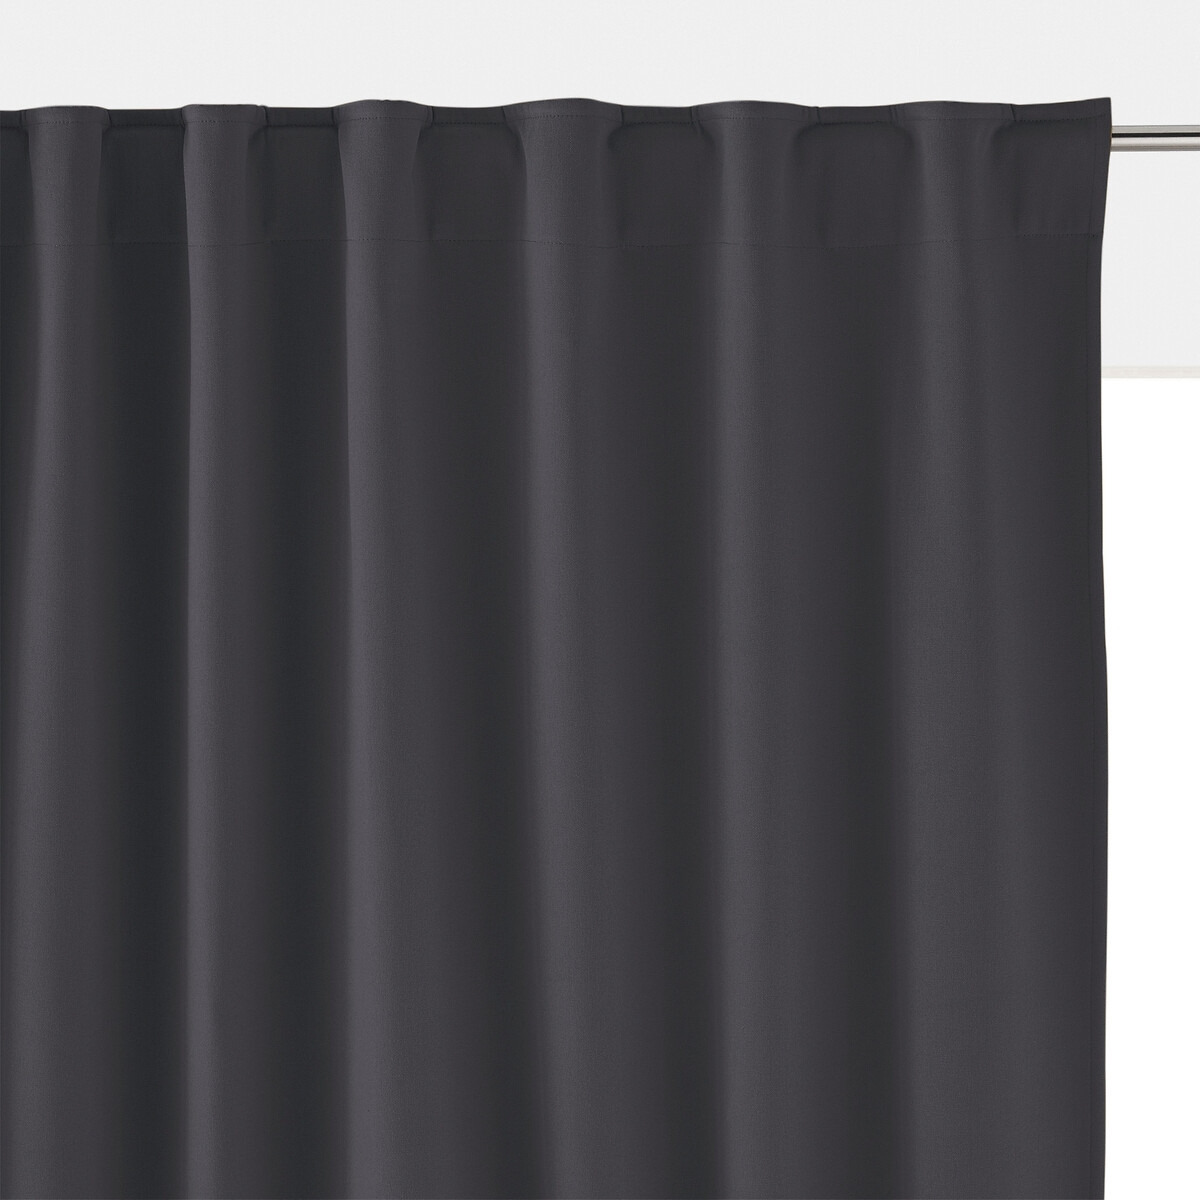 Panason Thermal Blackout Radiator Curtain - image 1